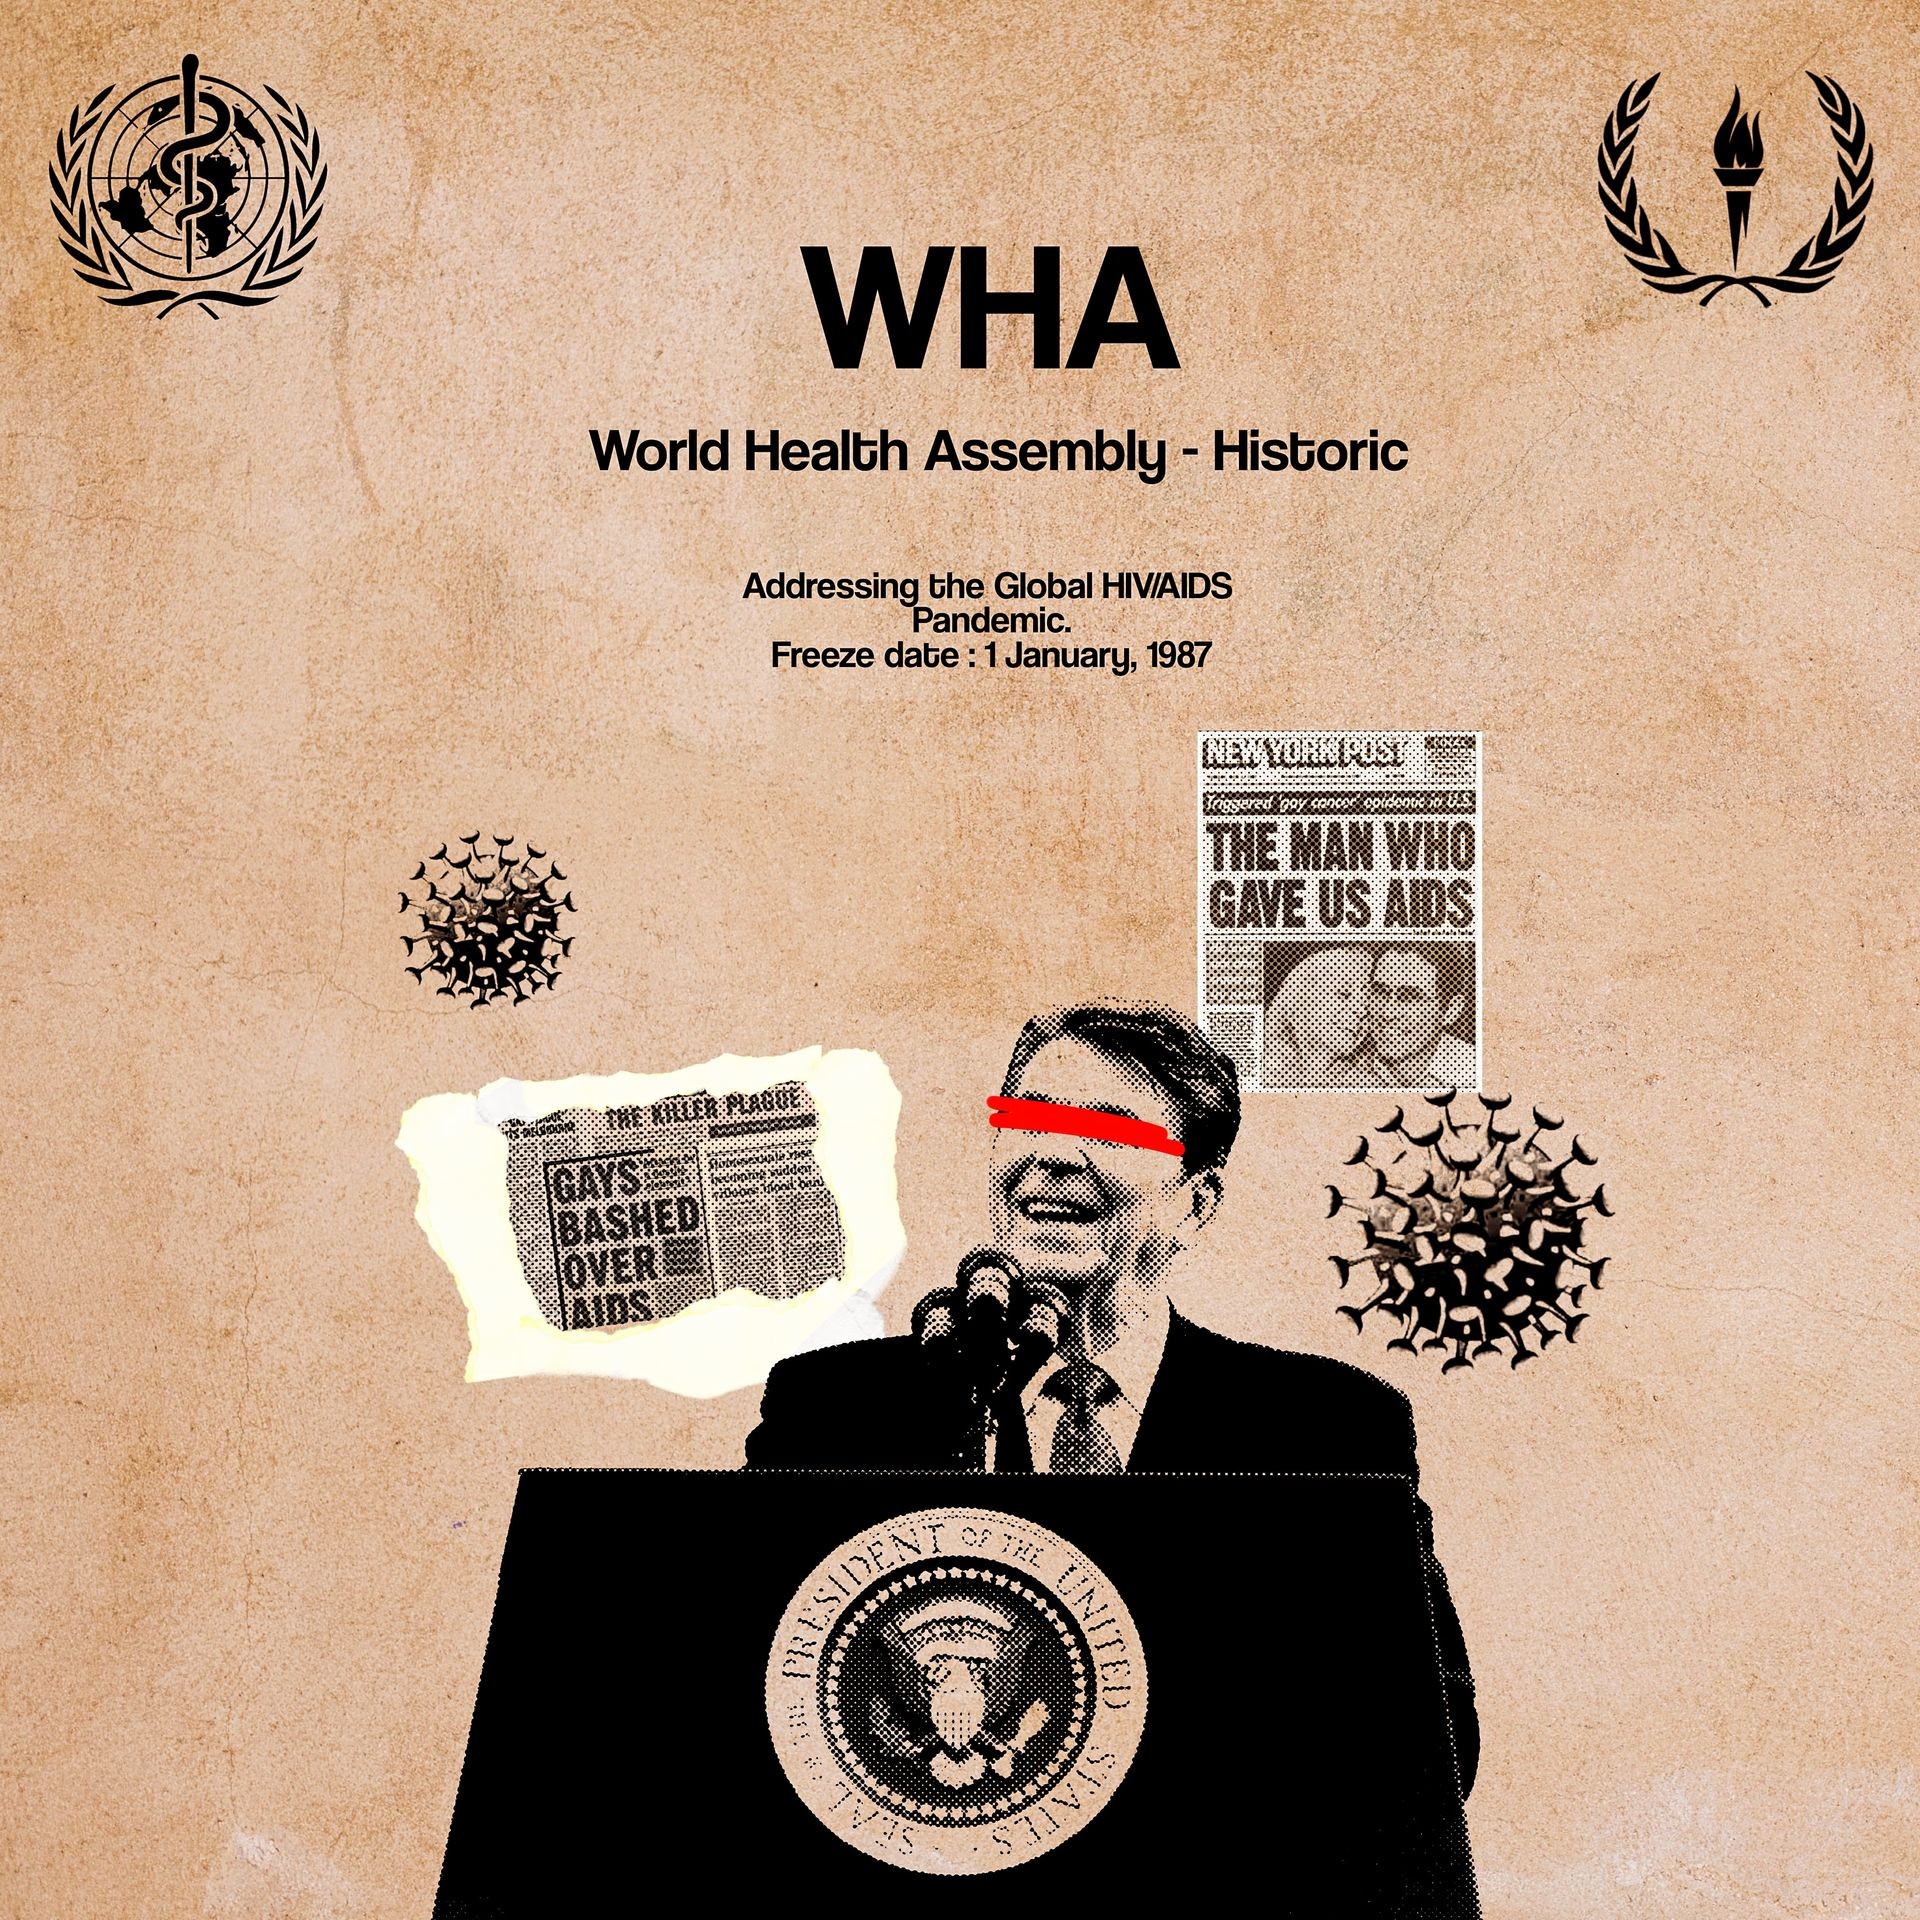 World Health Assembly-Historic (WHA-H)